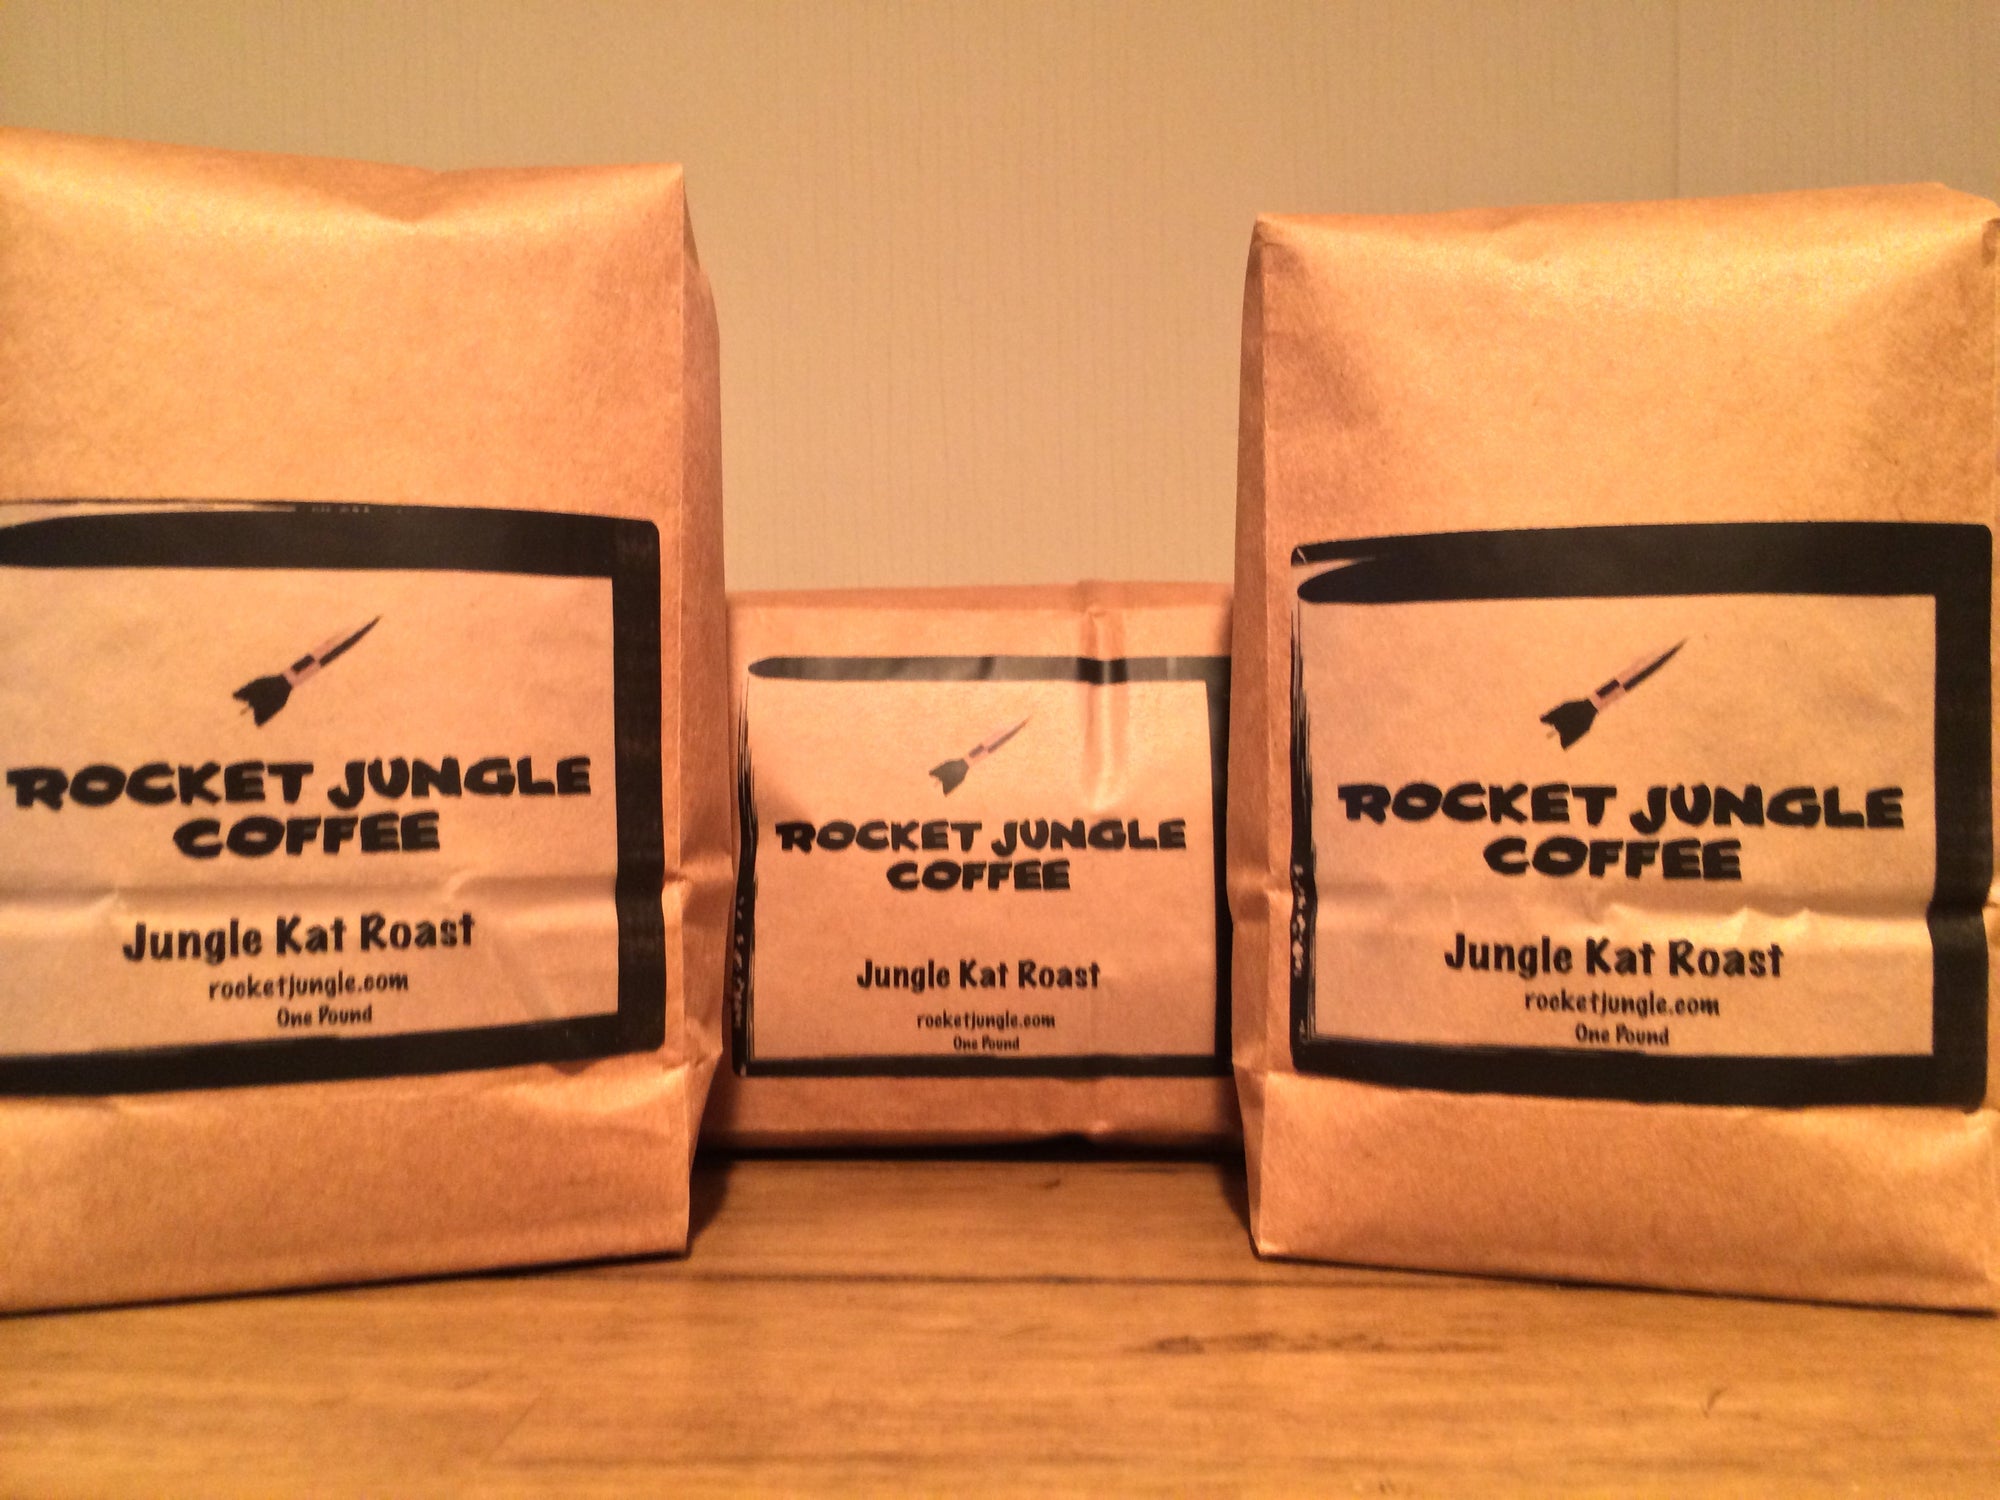 DECAF - Rocket Jungle Coffee Jungle Kat Roast